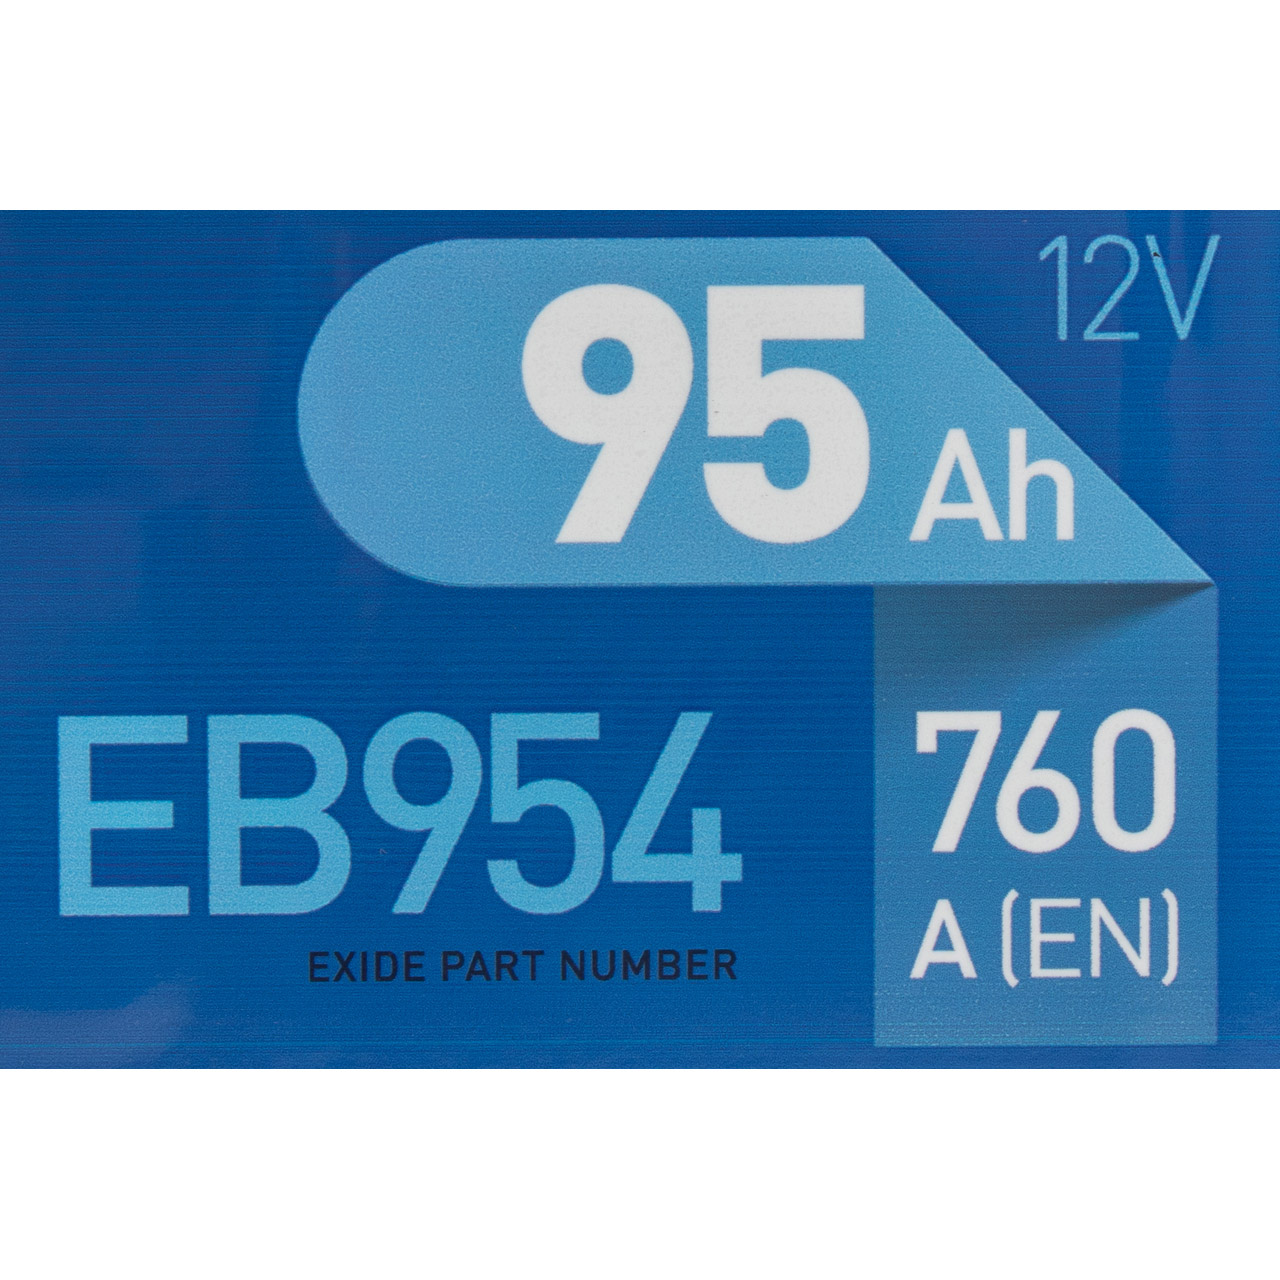 EXIDE EB954 EXCELL Autobatterie Batterie Starterbatterie 12V 95Ah EN760A